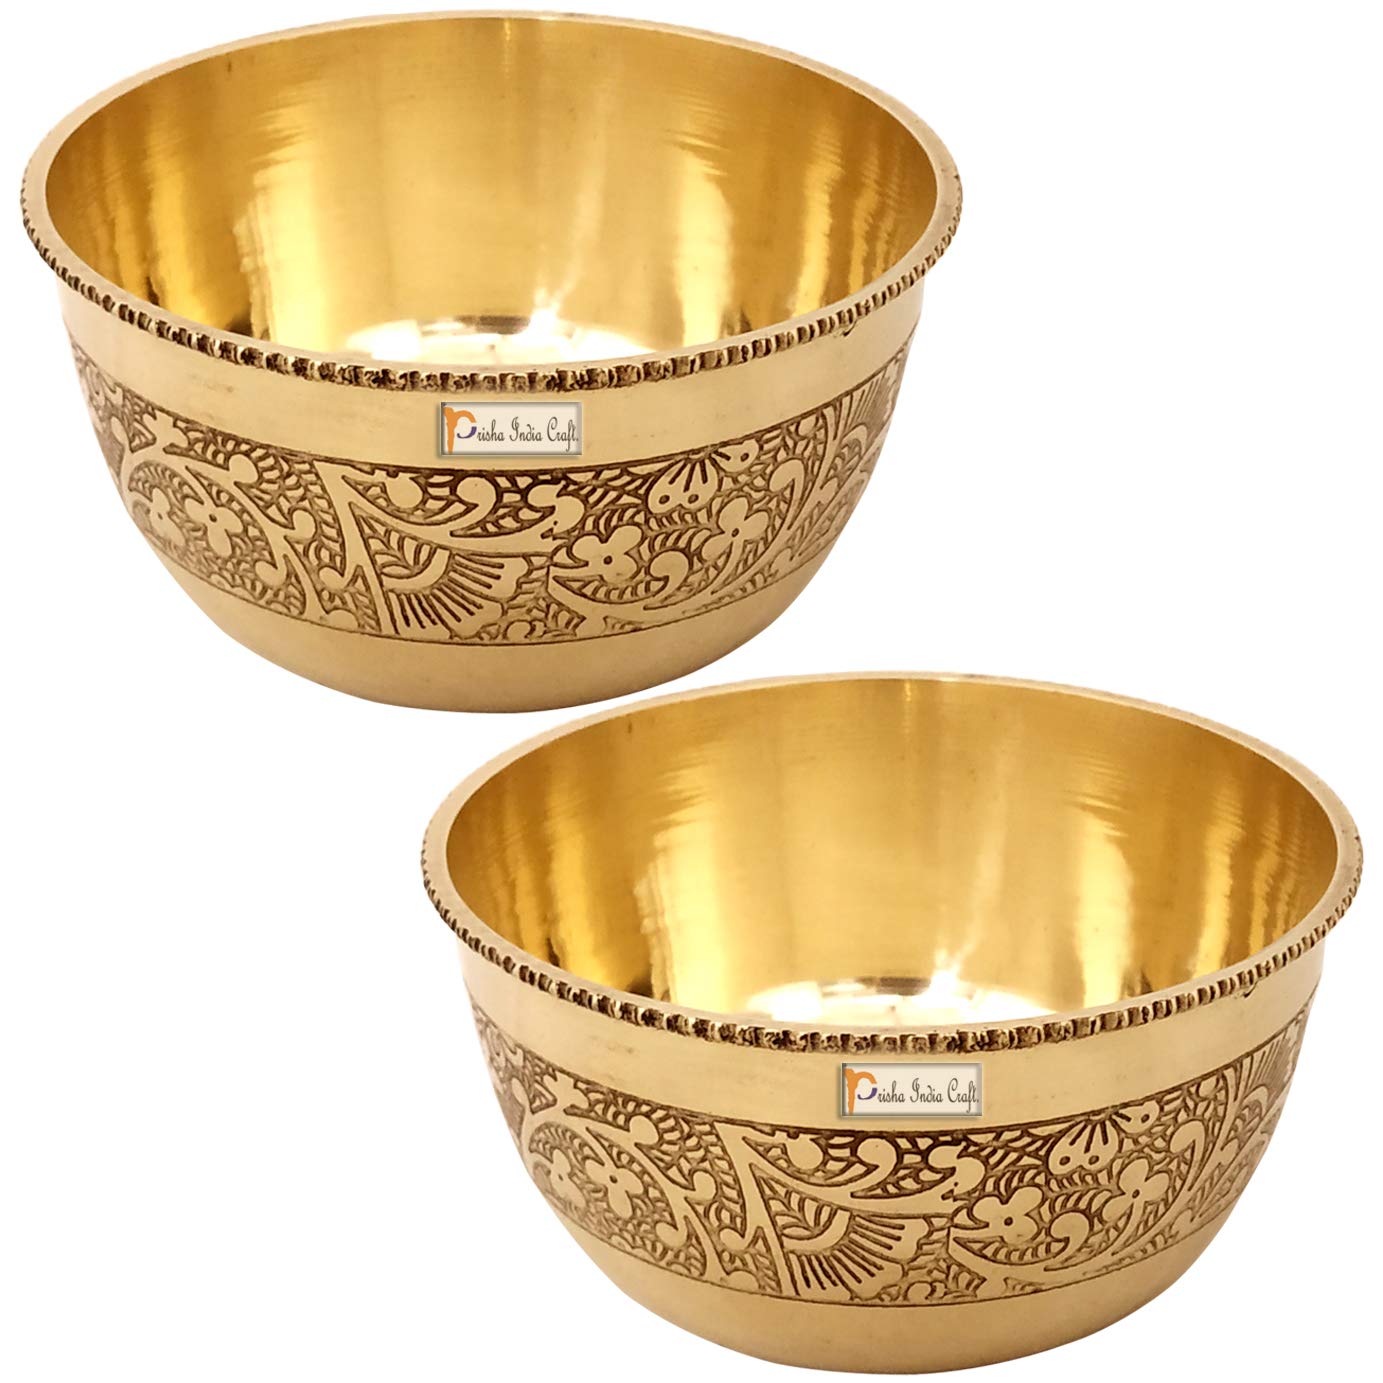 Prisha India Craft Pure Brass Embossed Design Small Beaded Bowl Katori, 150 ML, Set of 2